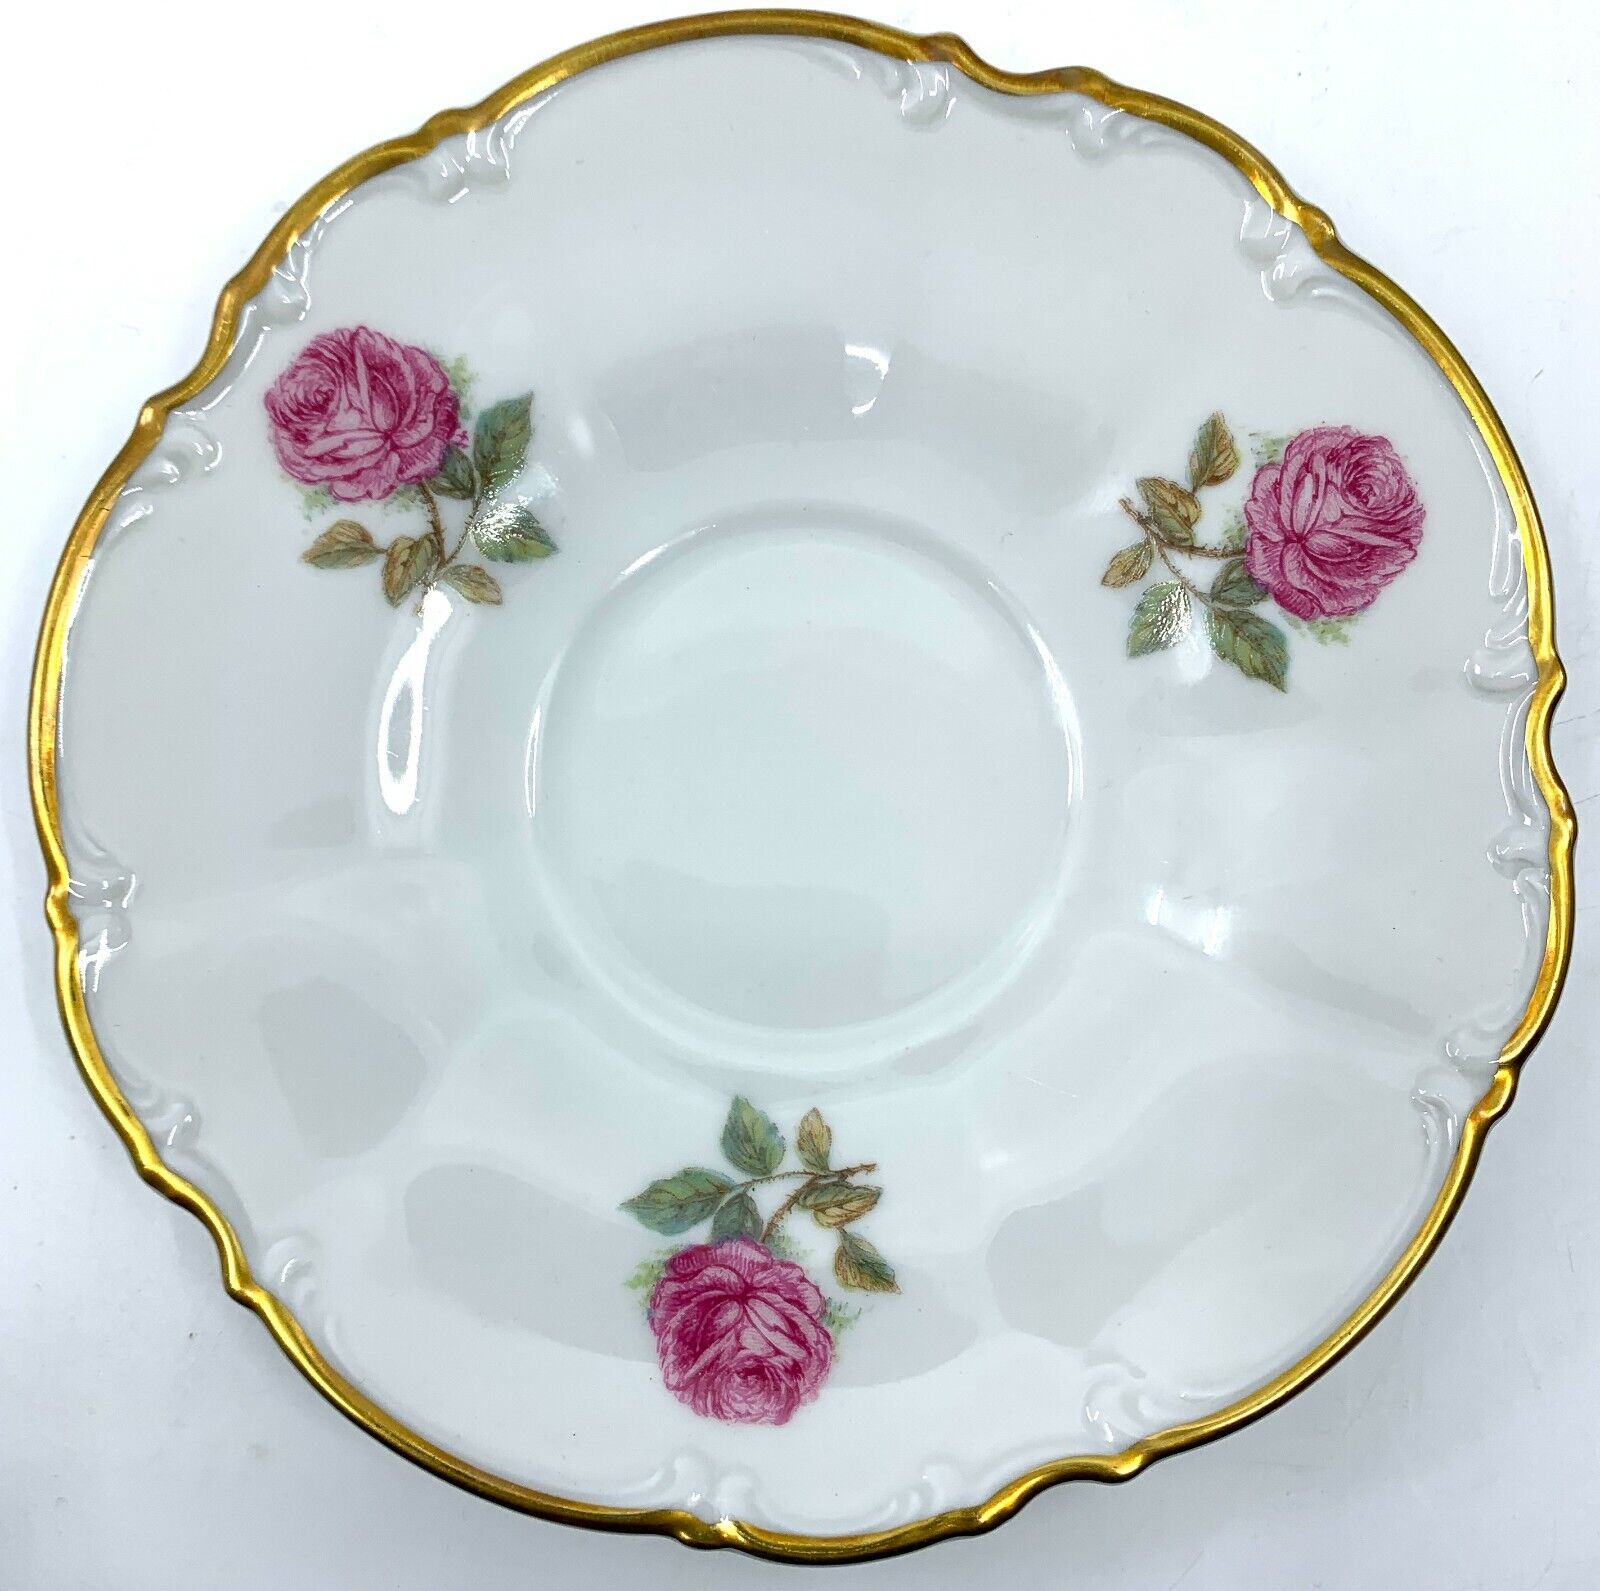 Vintage Tea Saucer Plate Hutschenreuther Gelb Pasco Bavaria Germany Floral Rose 